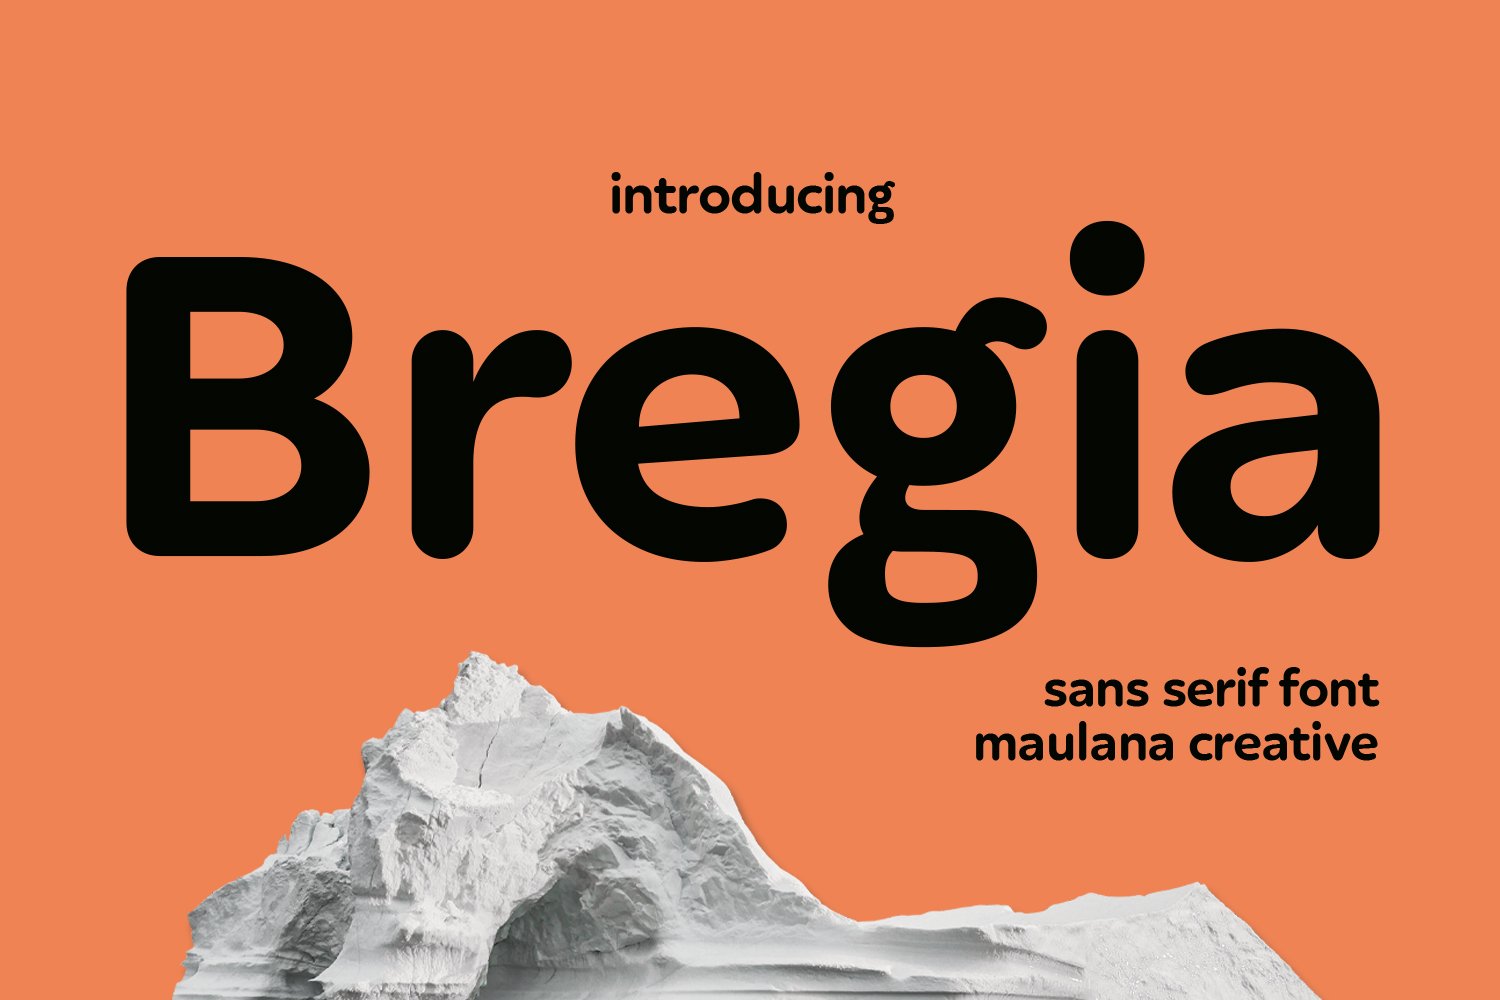 Bregia Soft Sans Display Font cover image.